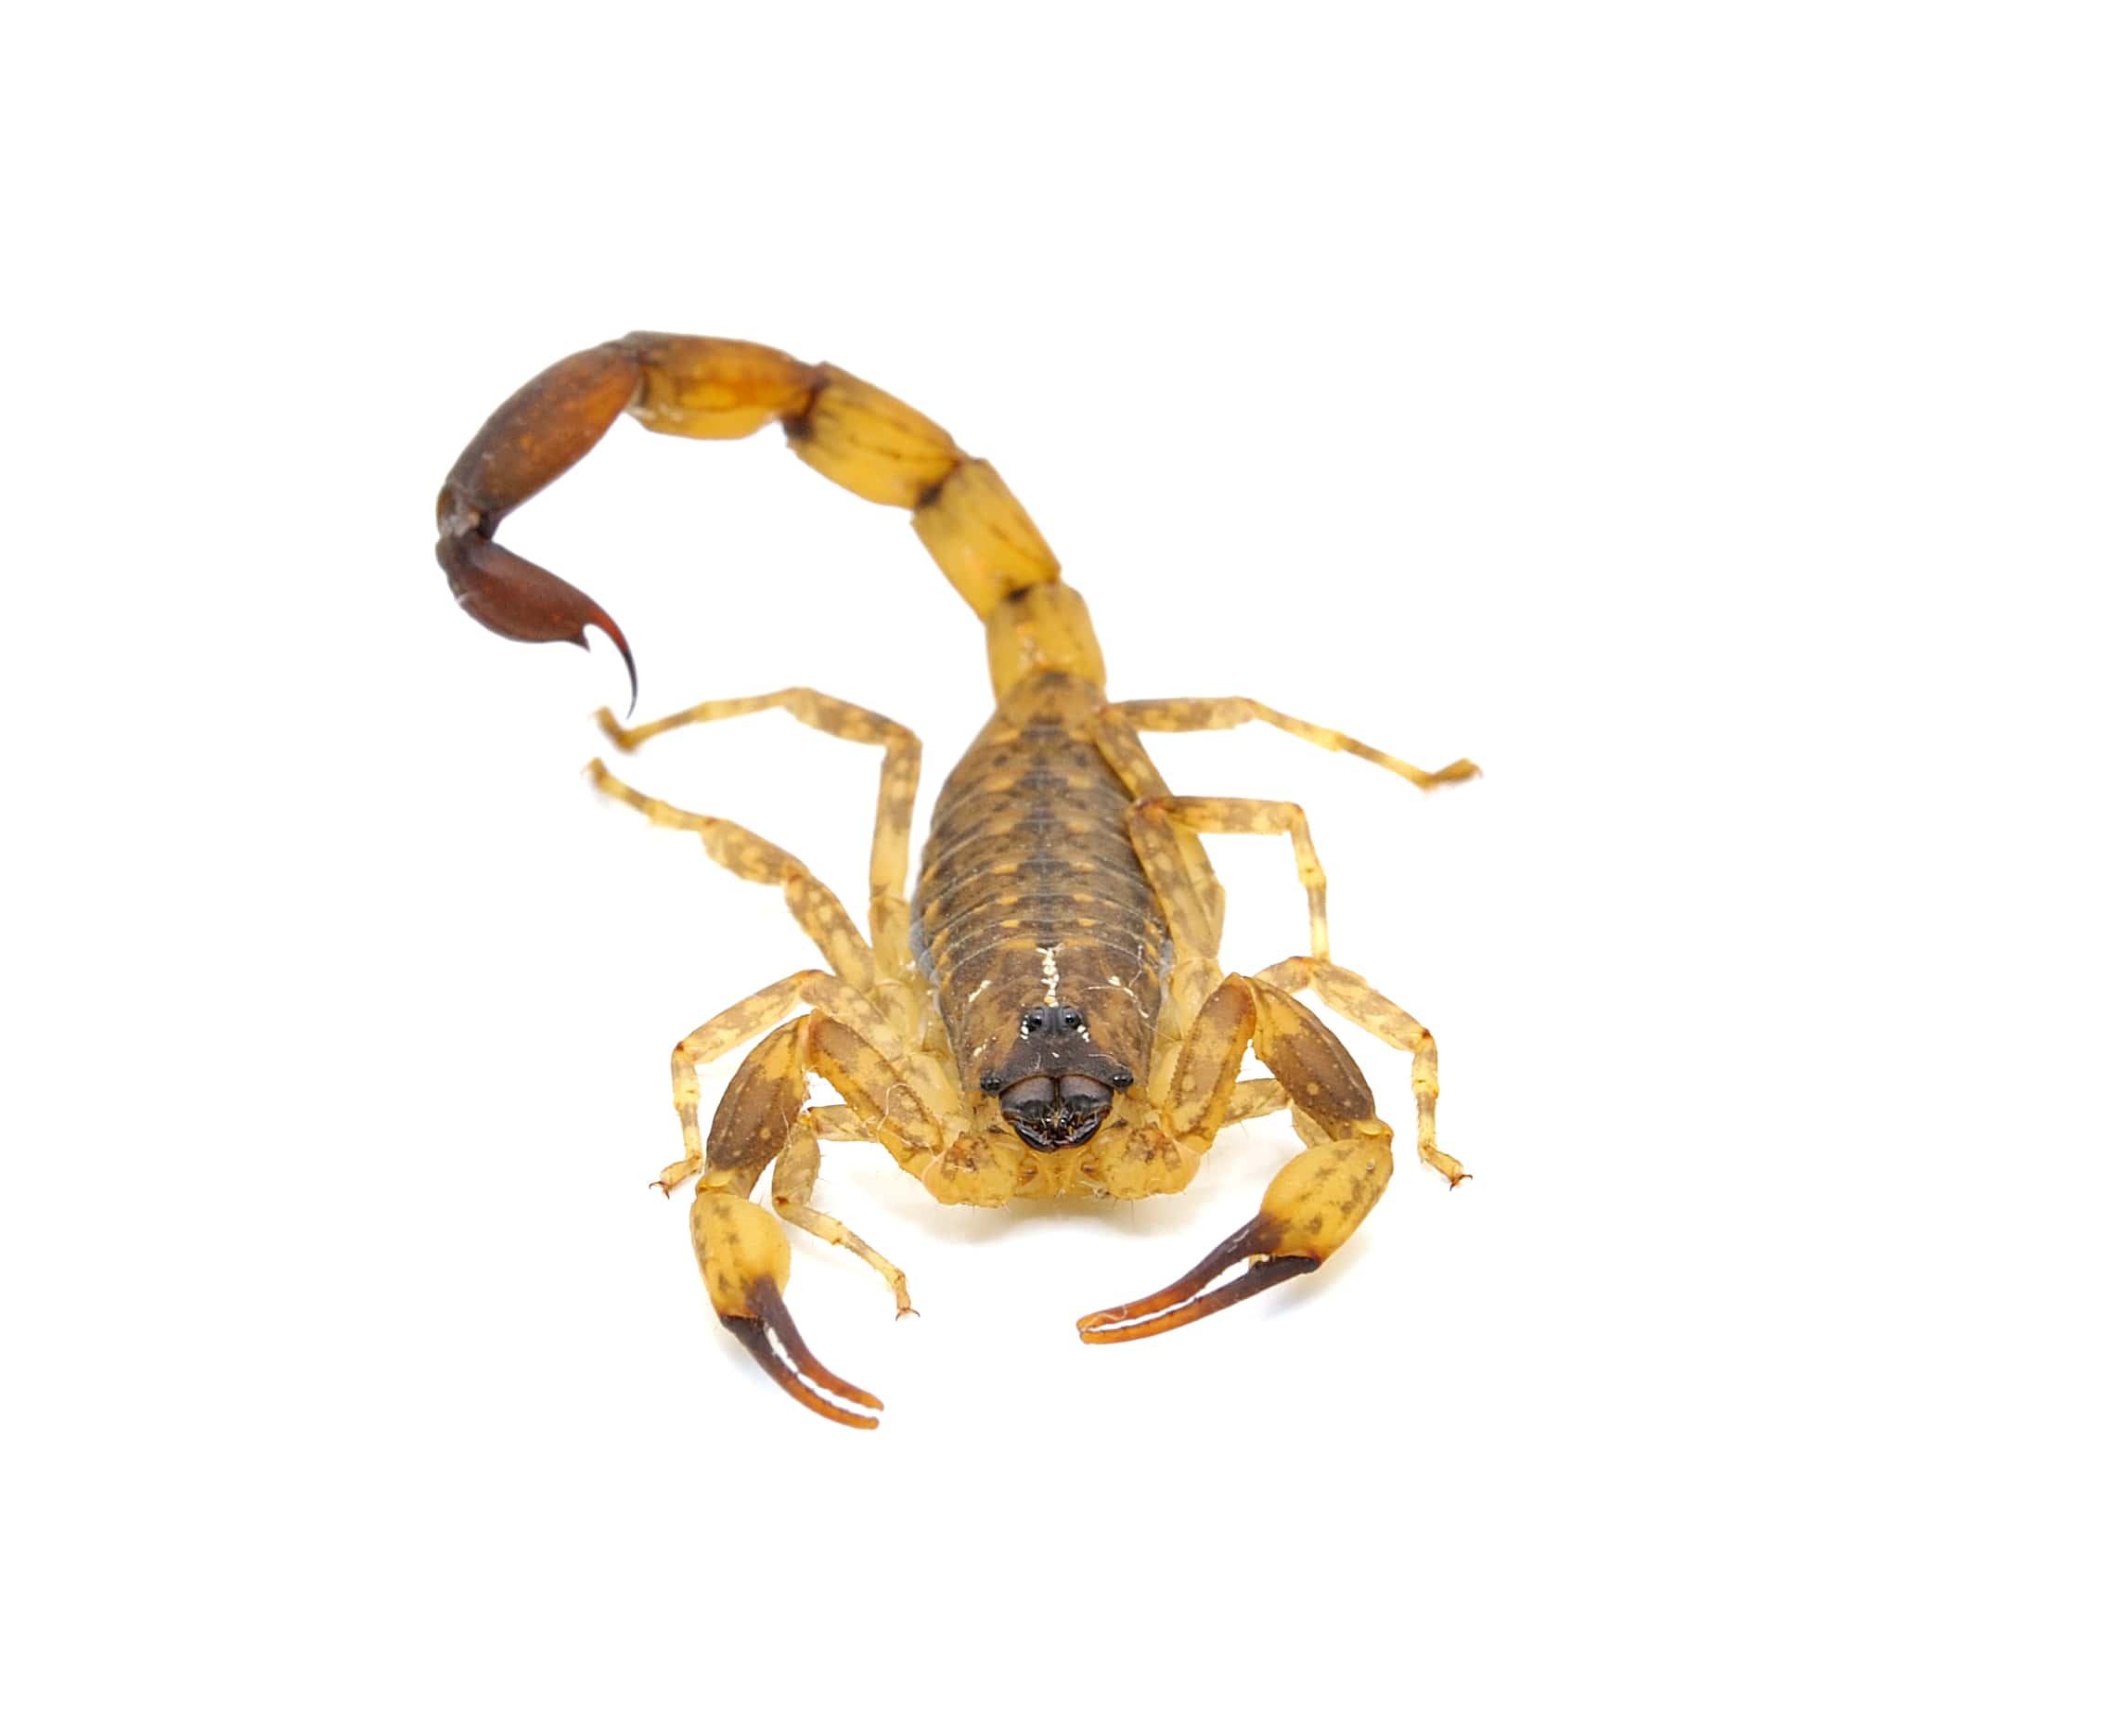 scorpion-isolated-on-white-background-min